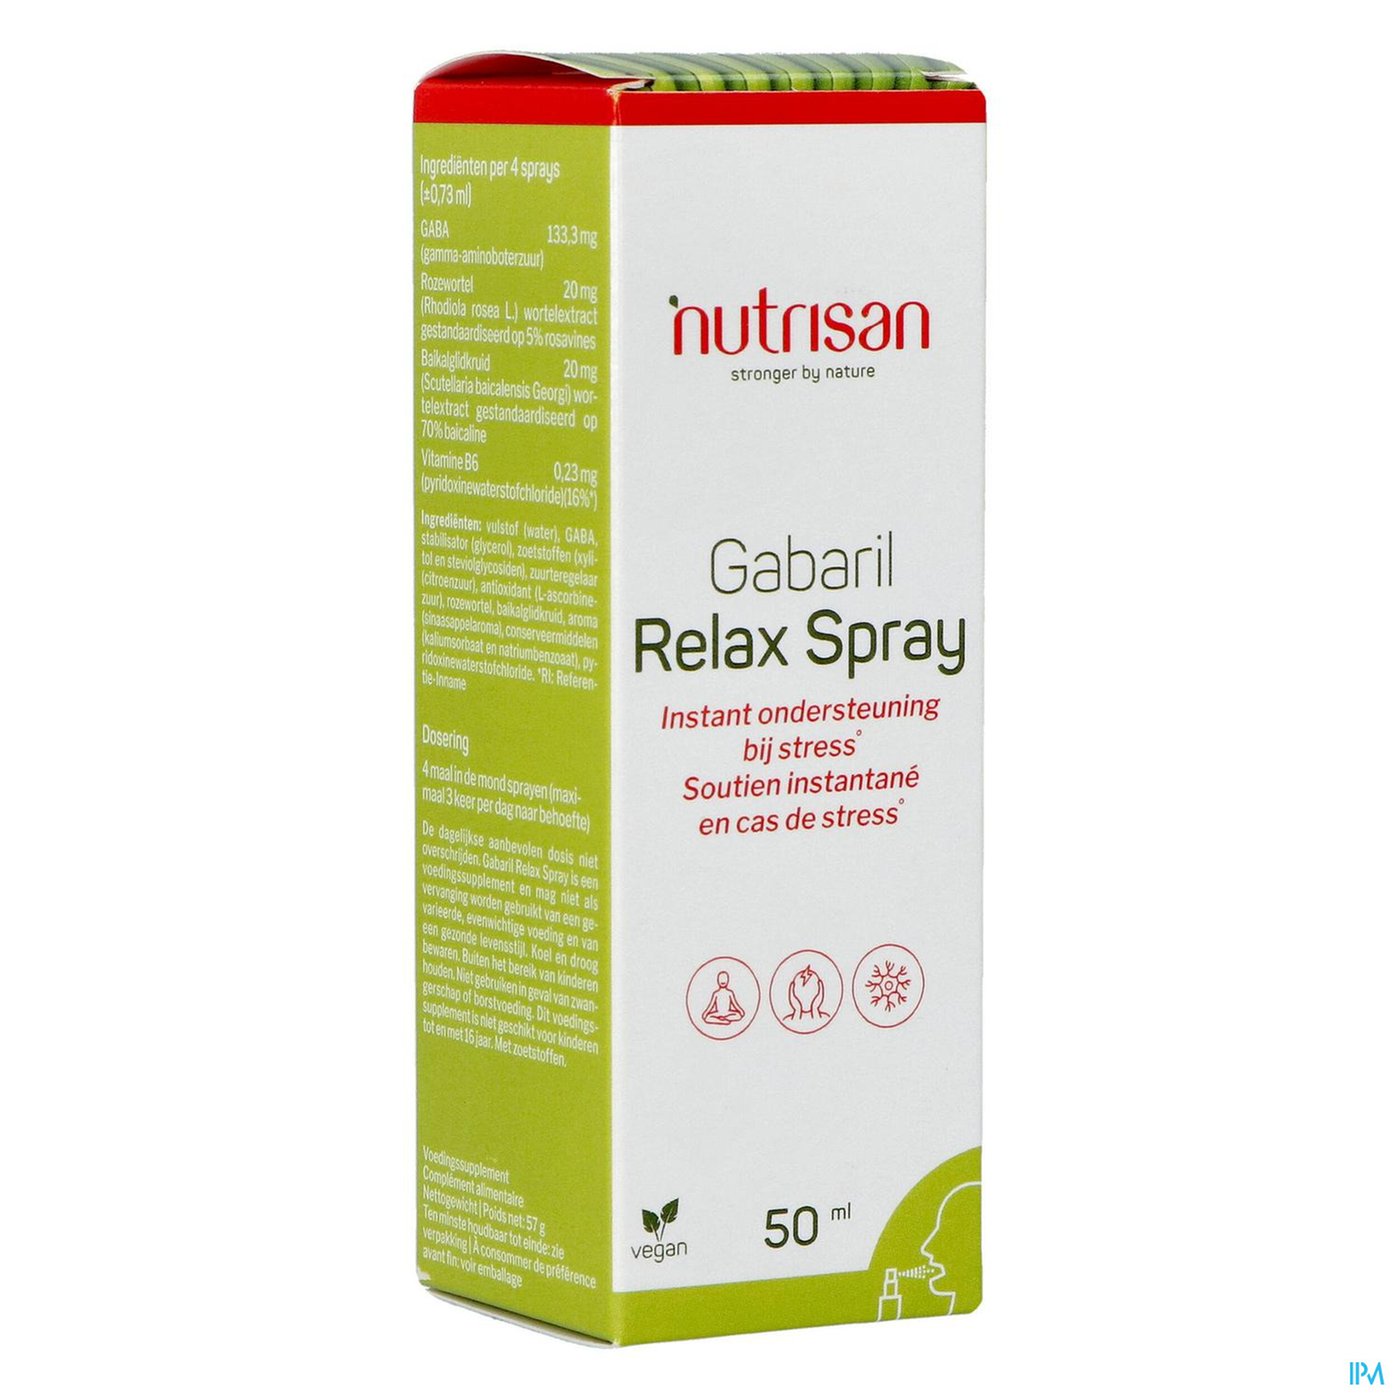 Gabaril Relax Spray 50ml Nutrisan